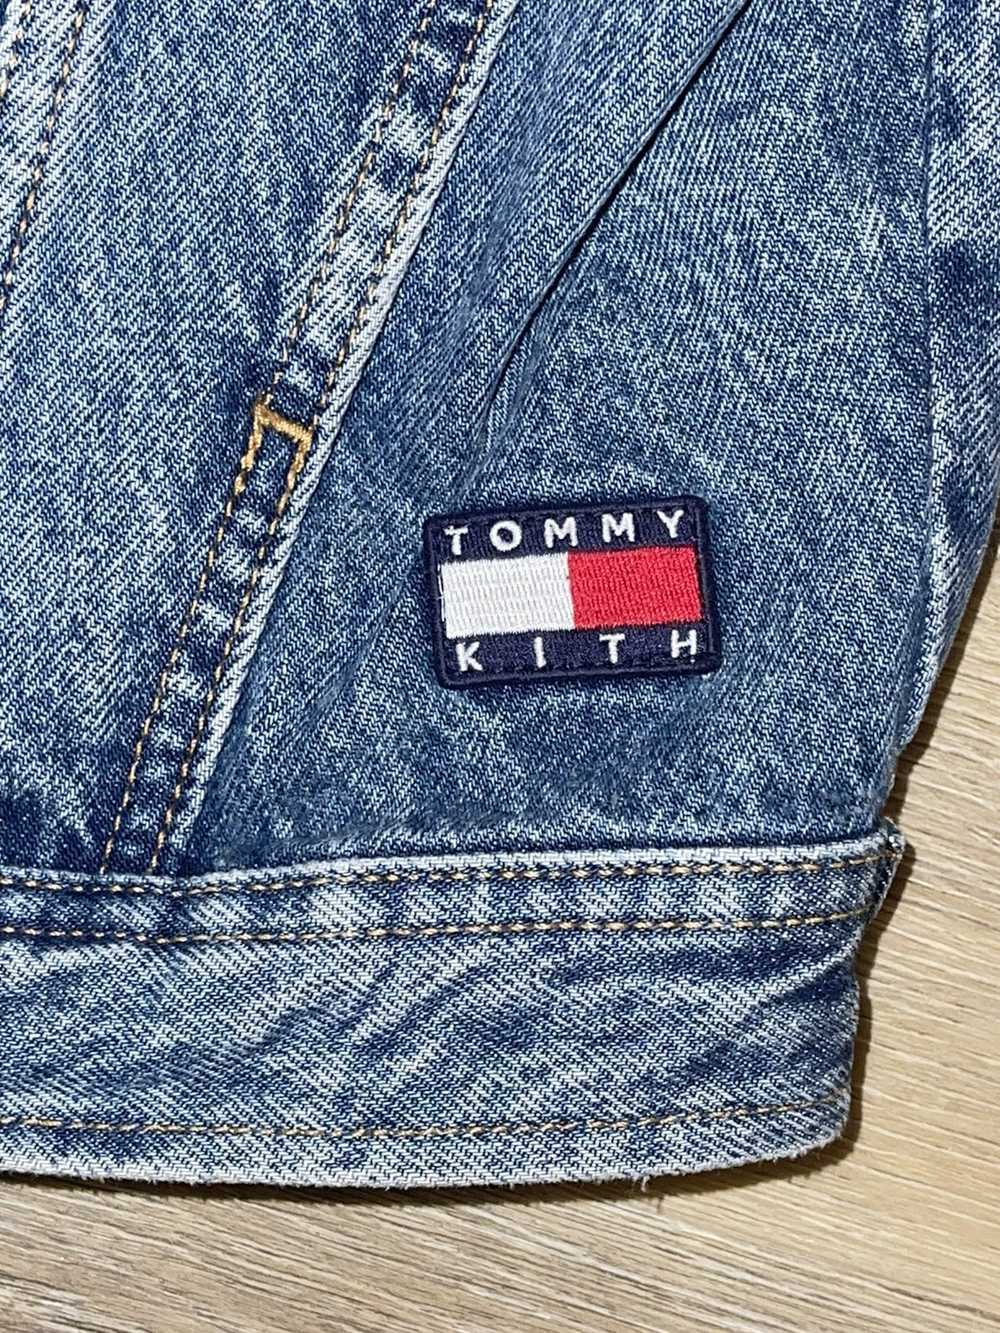 Kith × Tommy Hilfiger Kith x Tommy Denim jacket - image 7